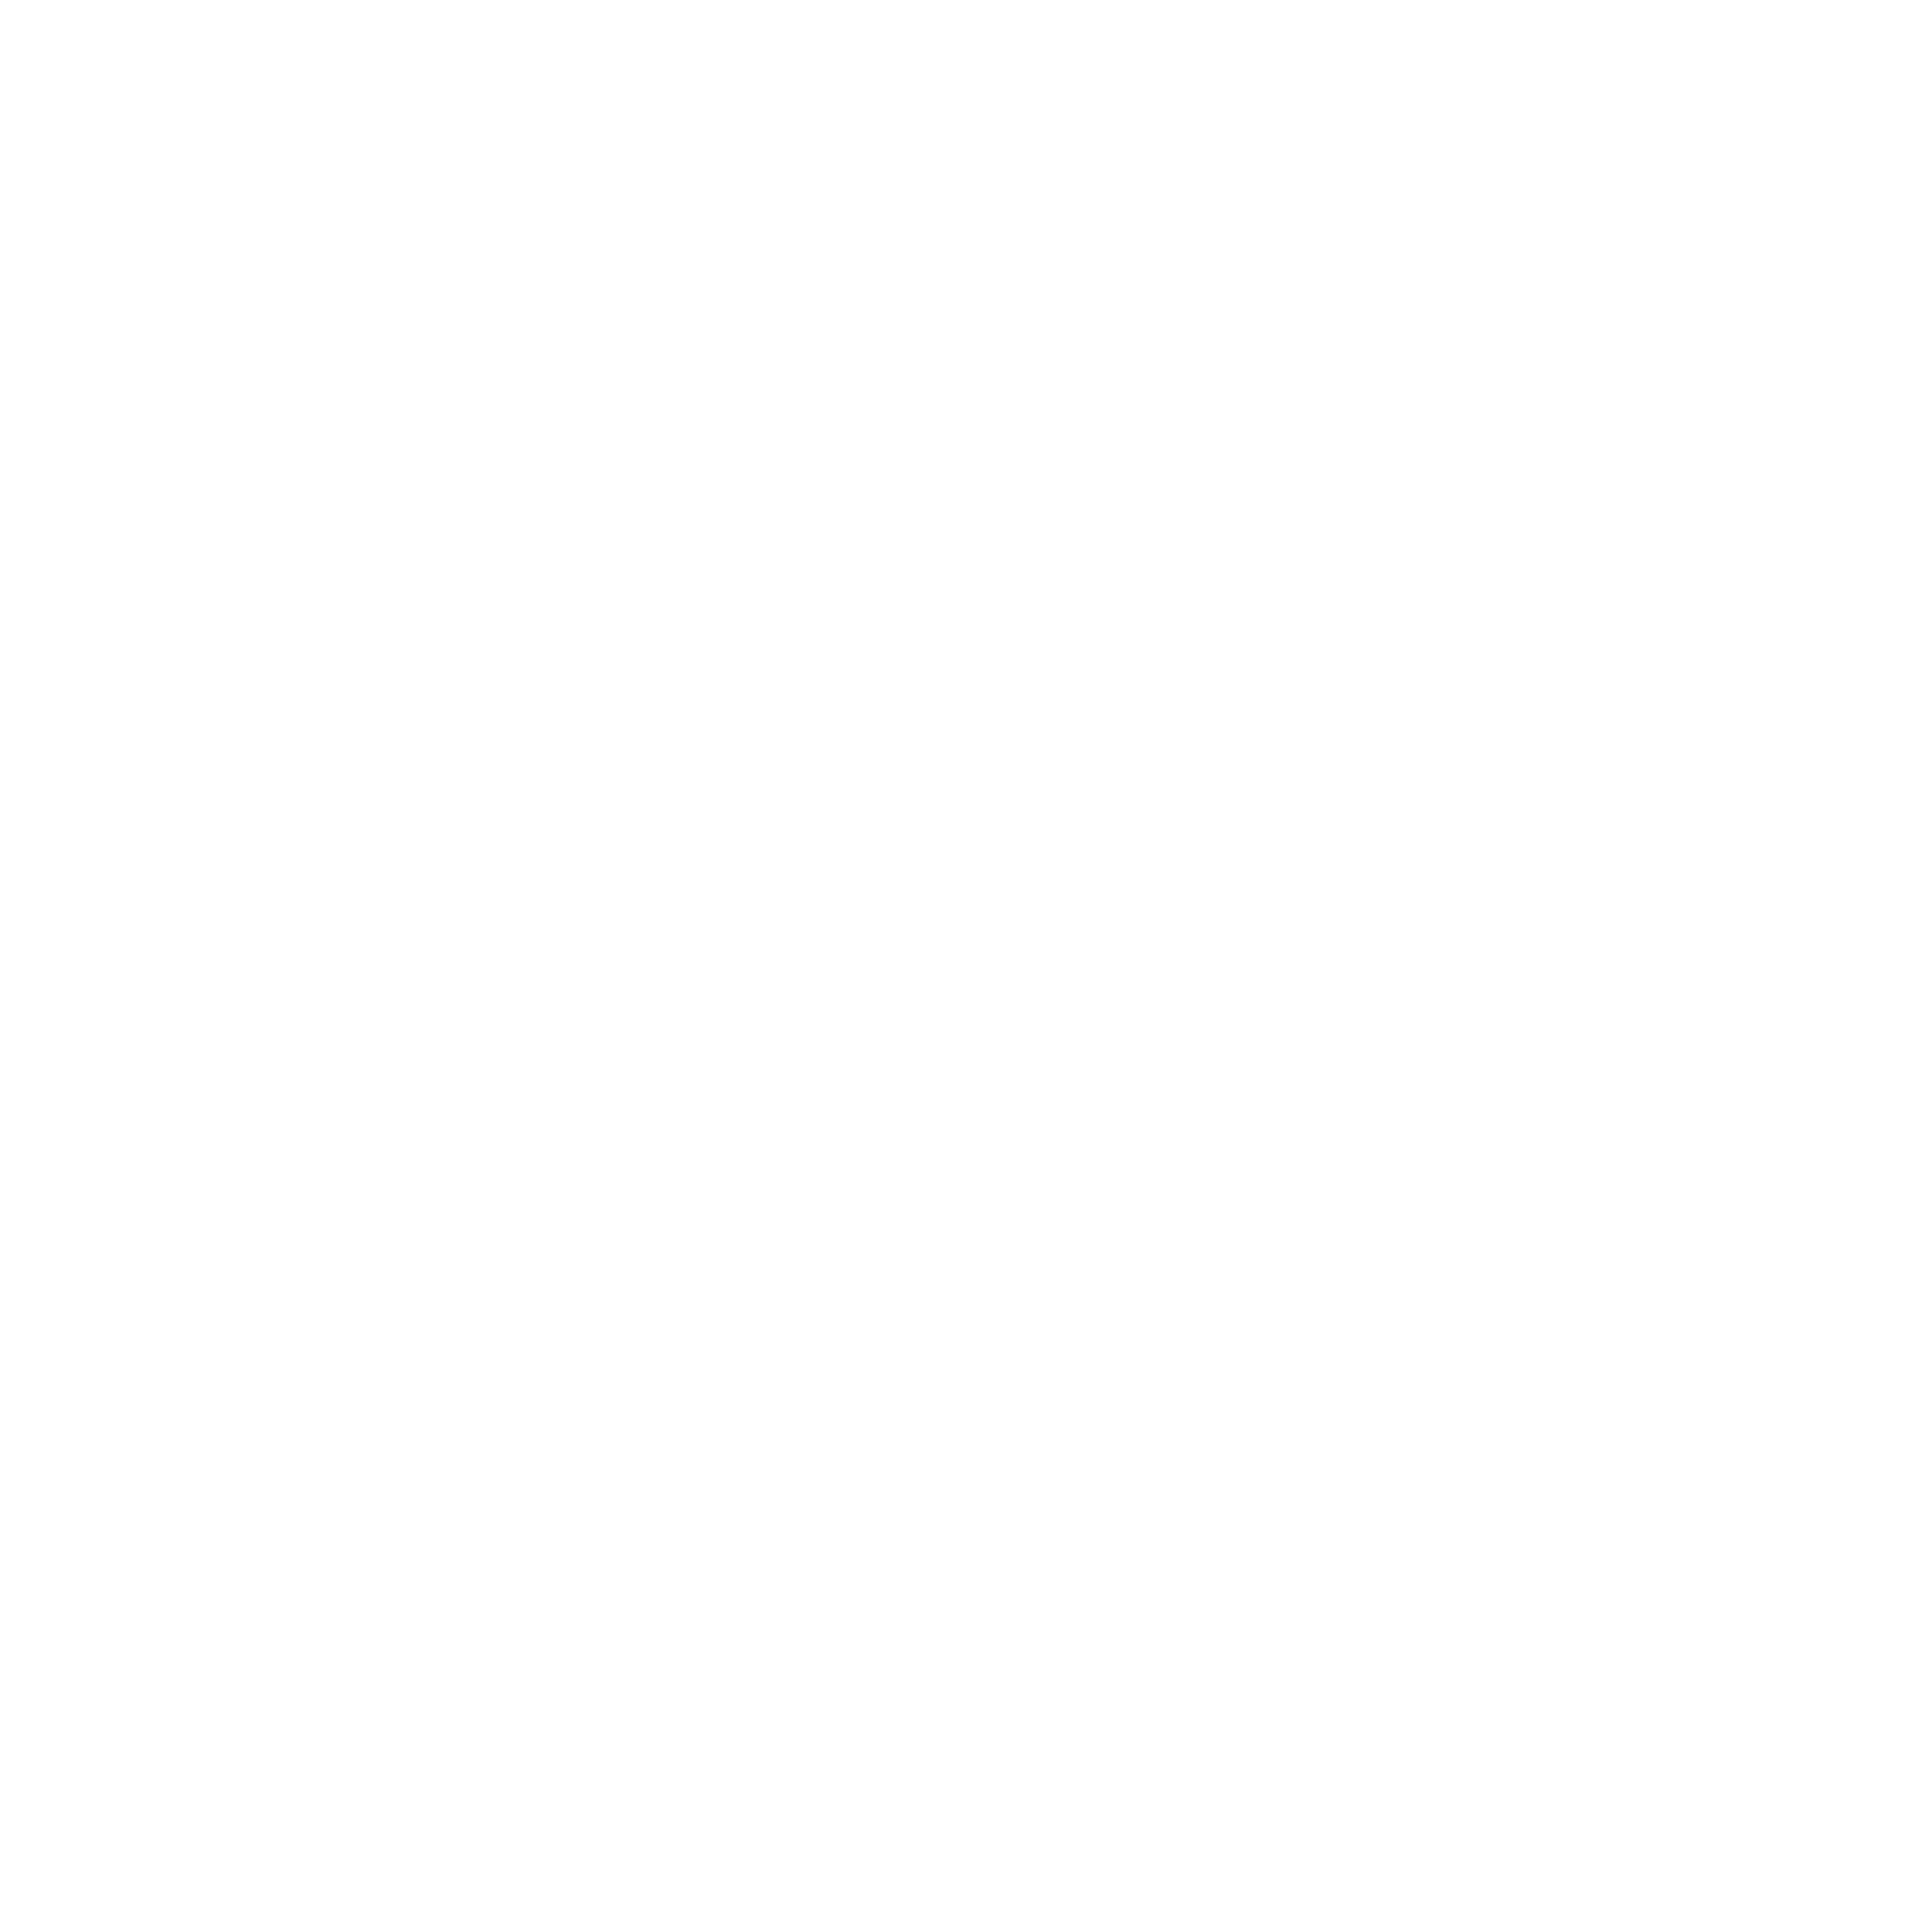 Brown and White Logo - Millward Brown Logo PNG Transparent & SVG Vector